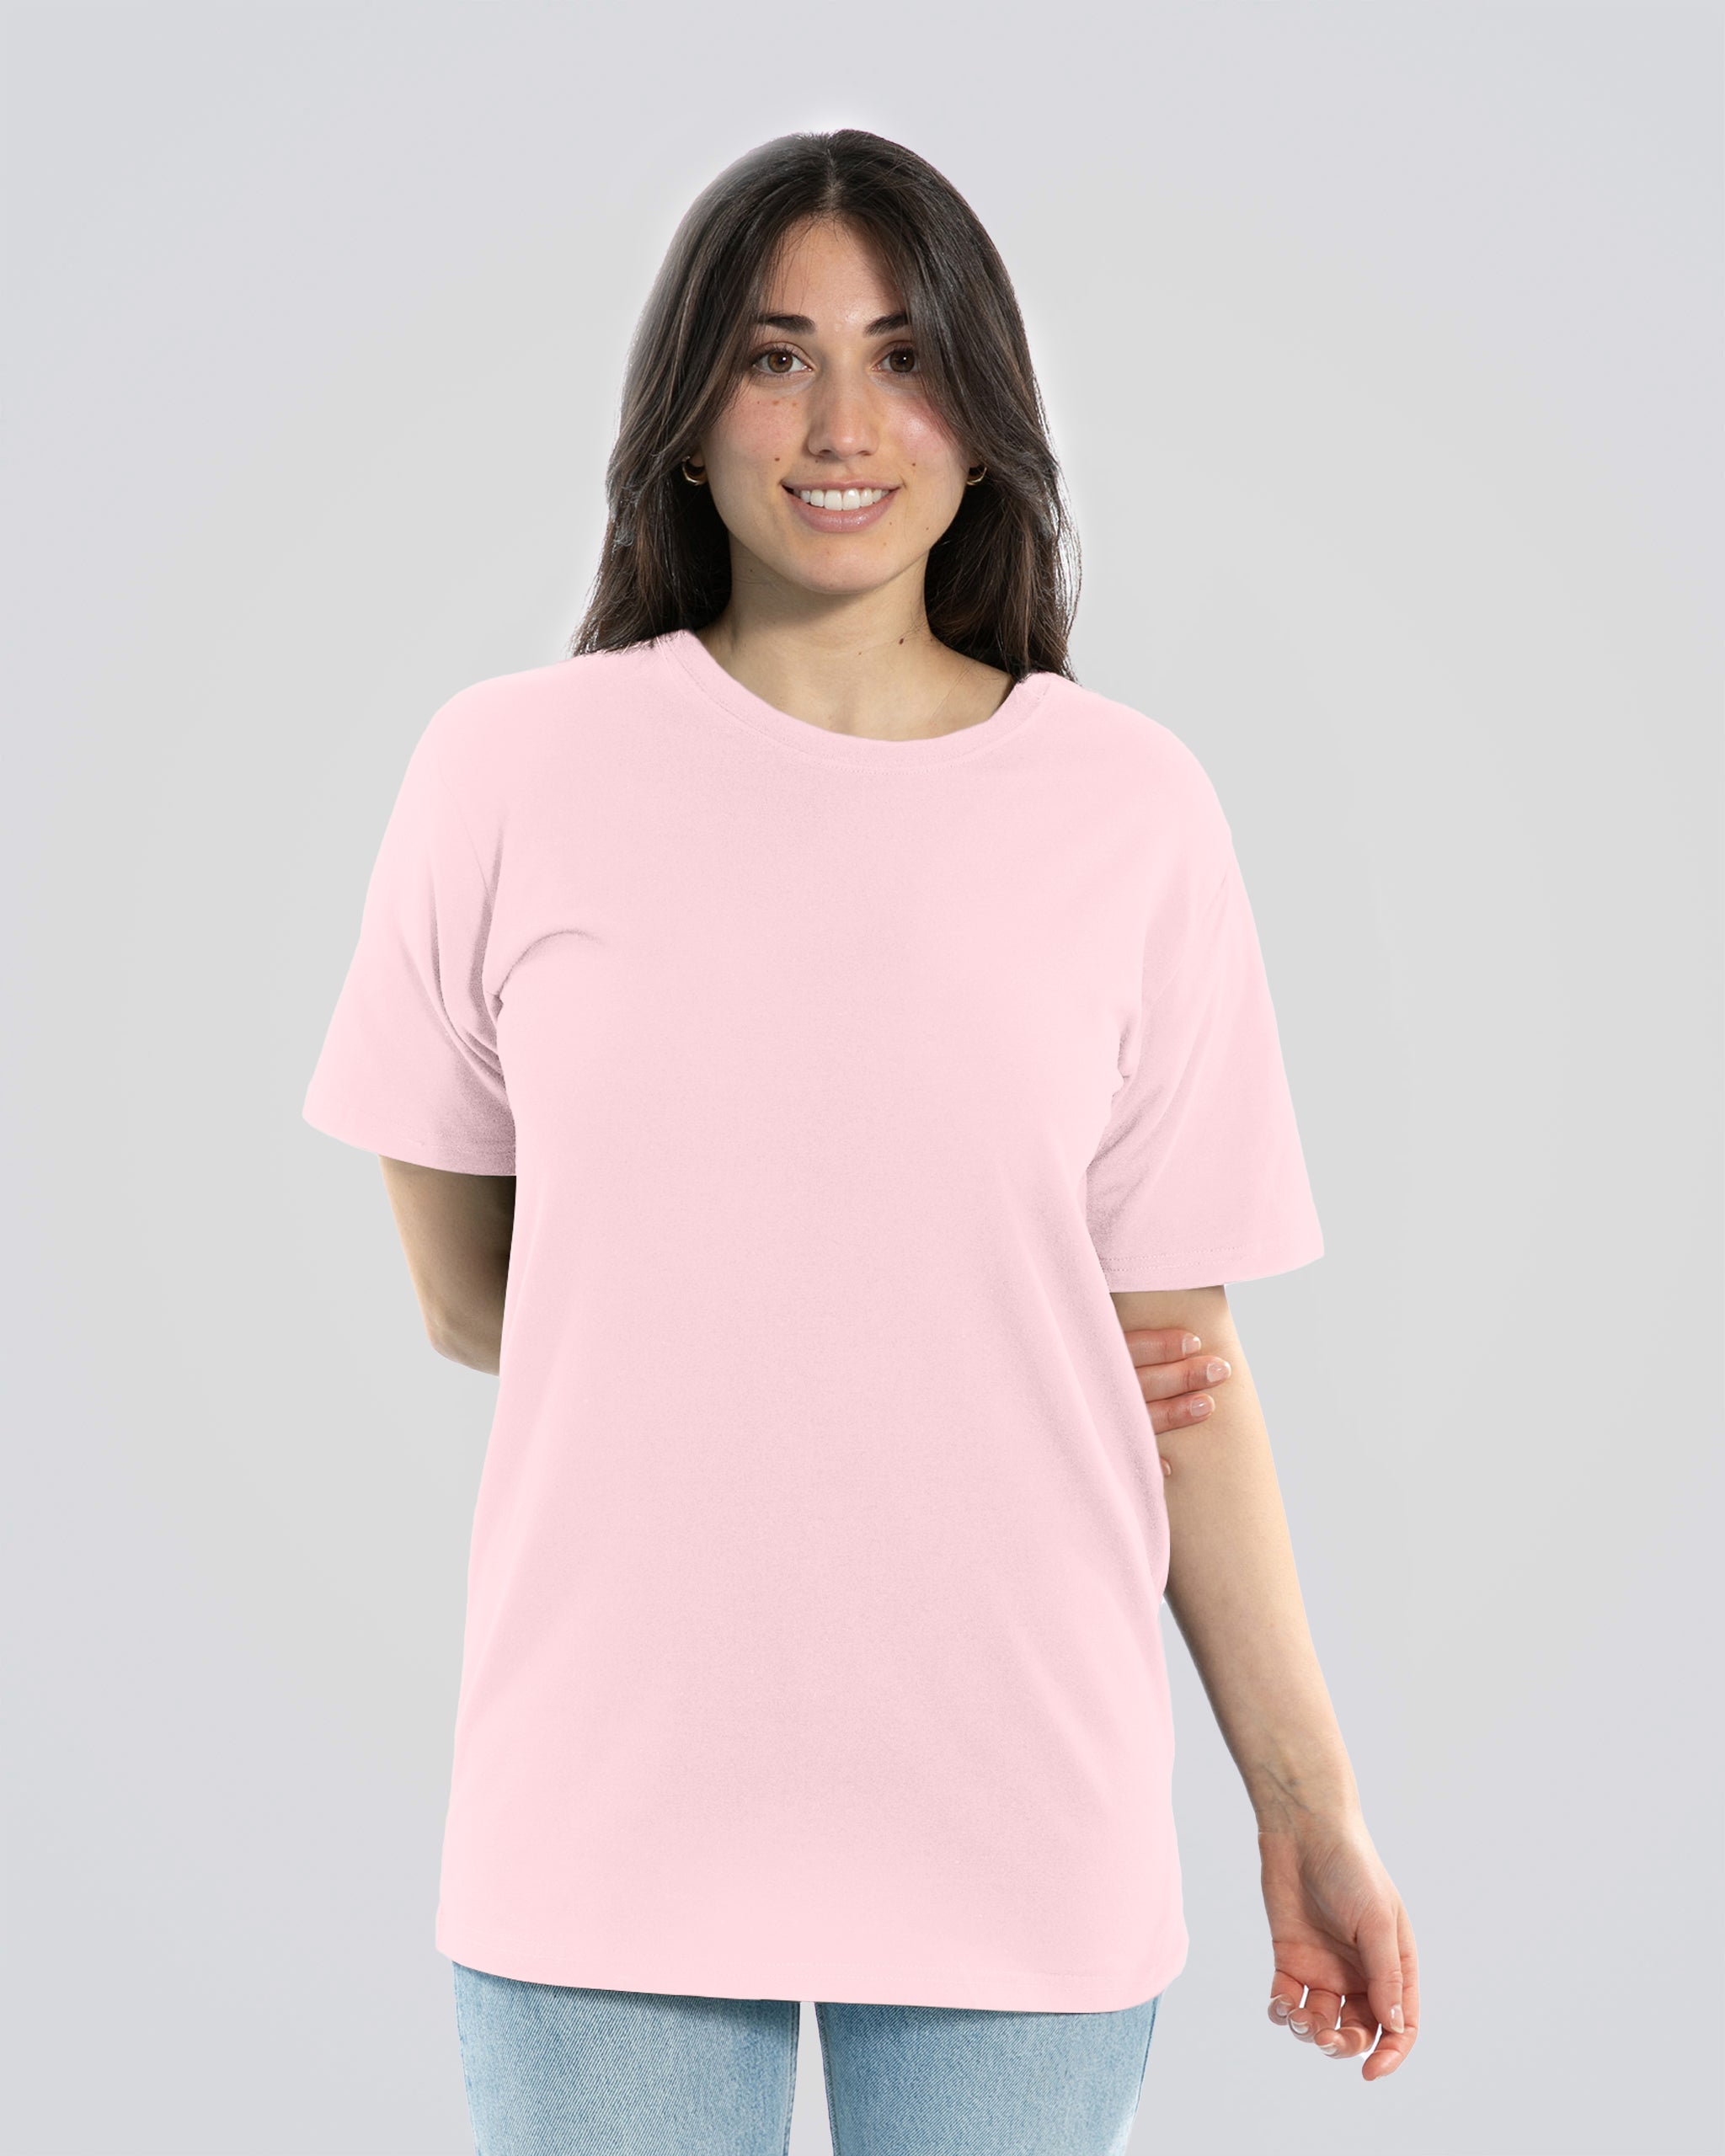 Sweat Proof T-Shirt - Pink - Women's Sweat Proof Shirt (Crewneck) | Social Citizen M - Army Green